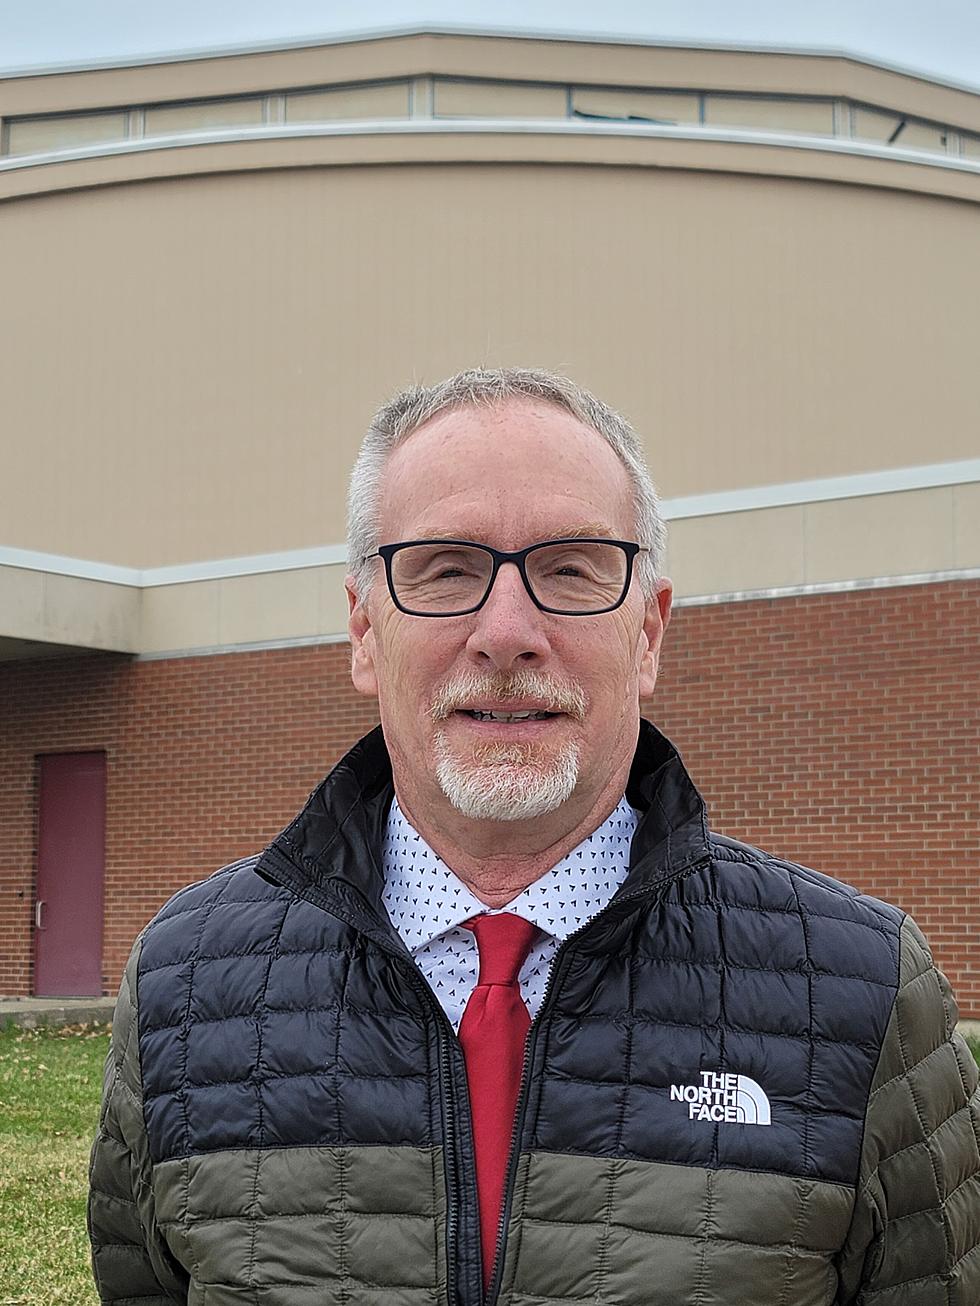 Bangor’s Superintendent Announces Retirement This Spring